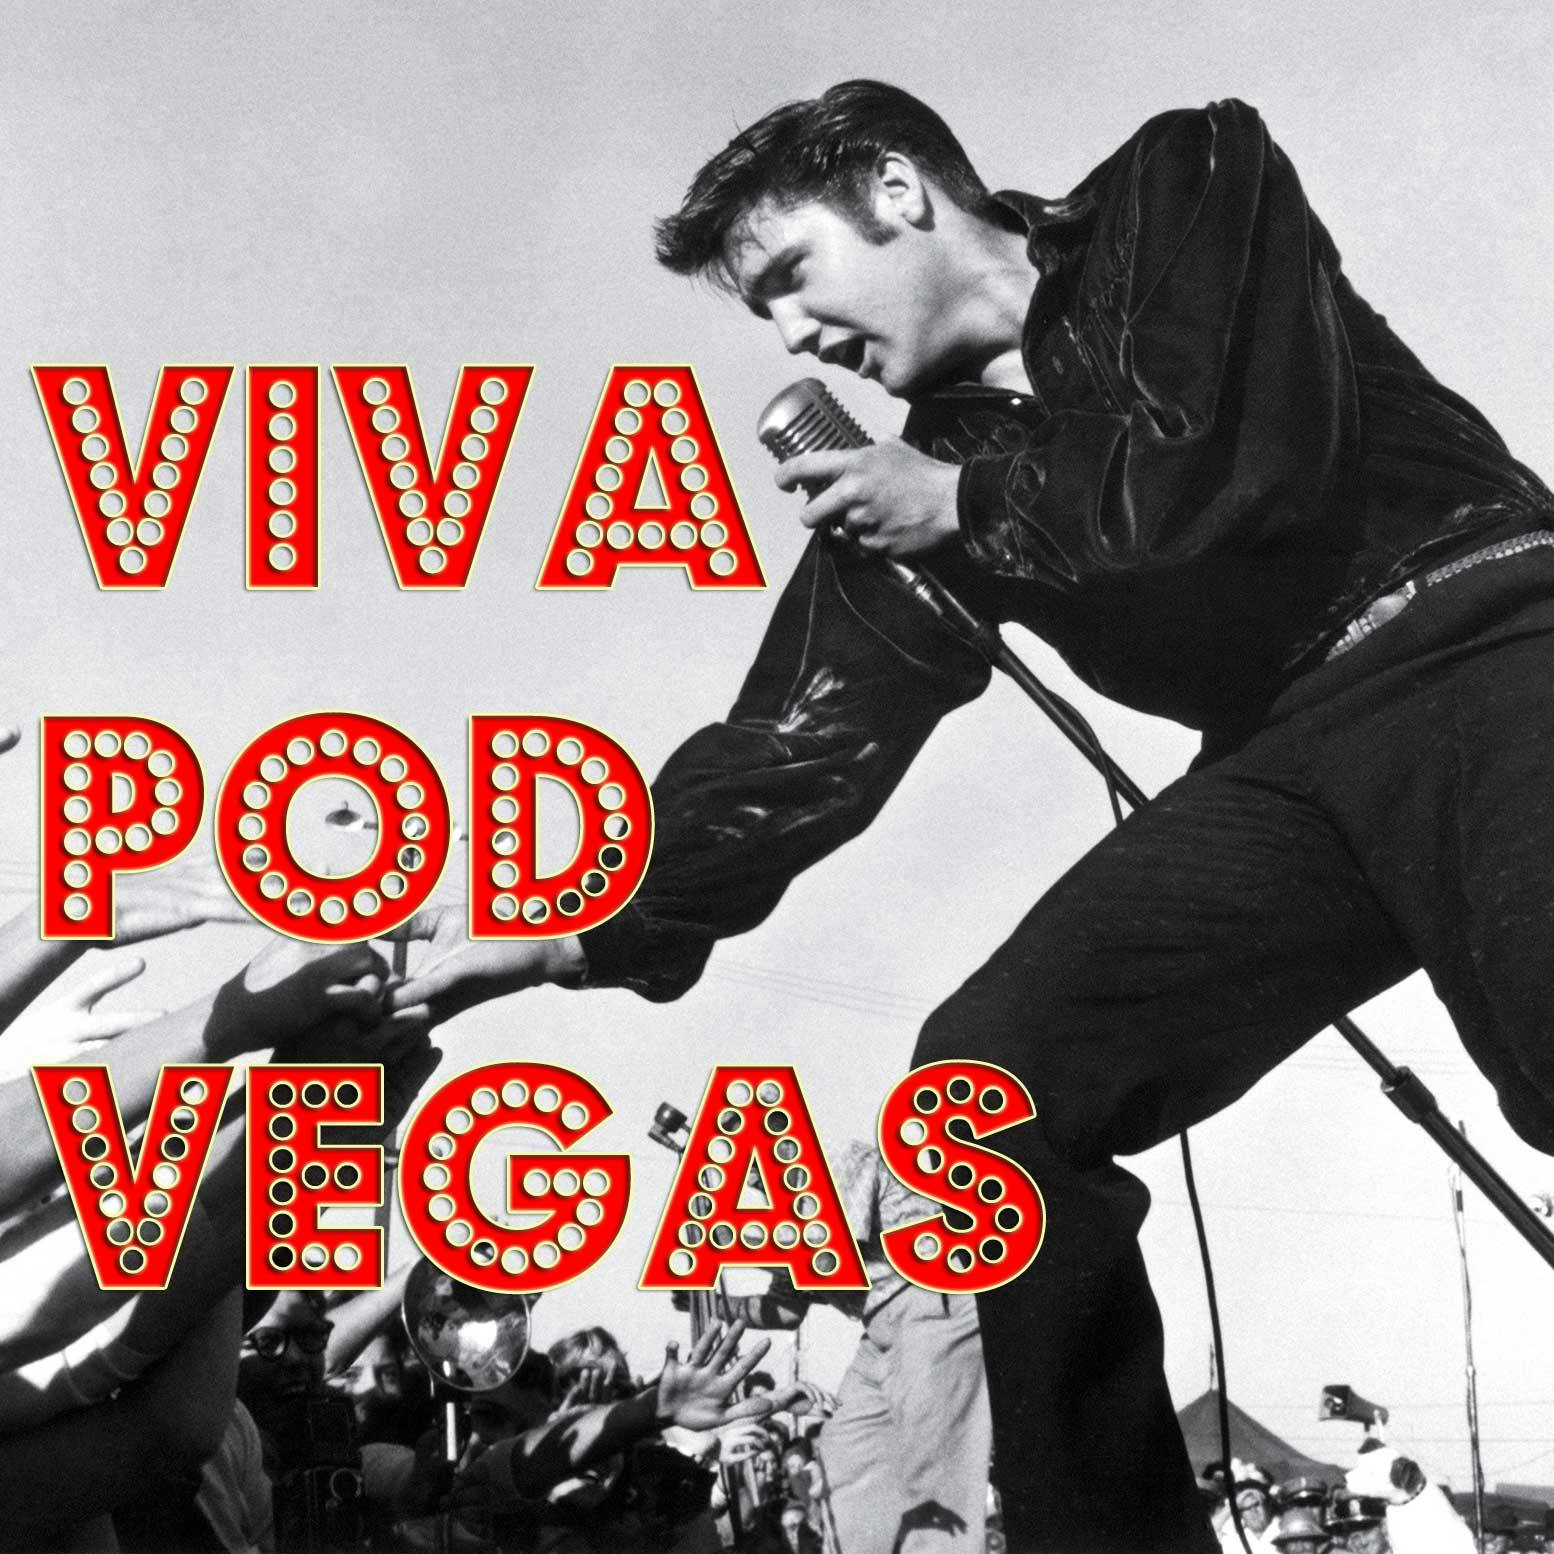 Introducing Viva Pod Vegas!